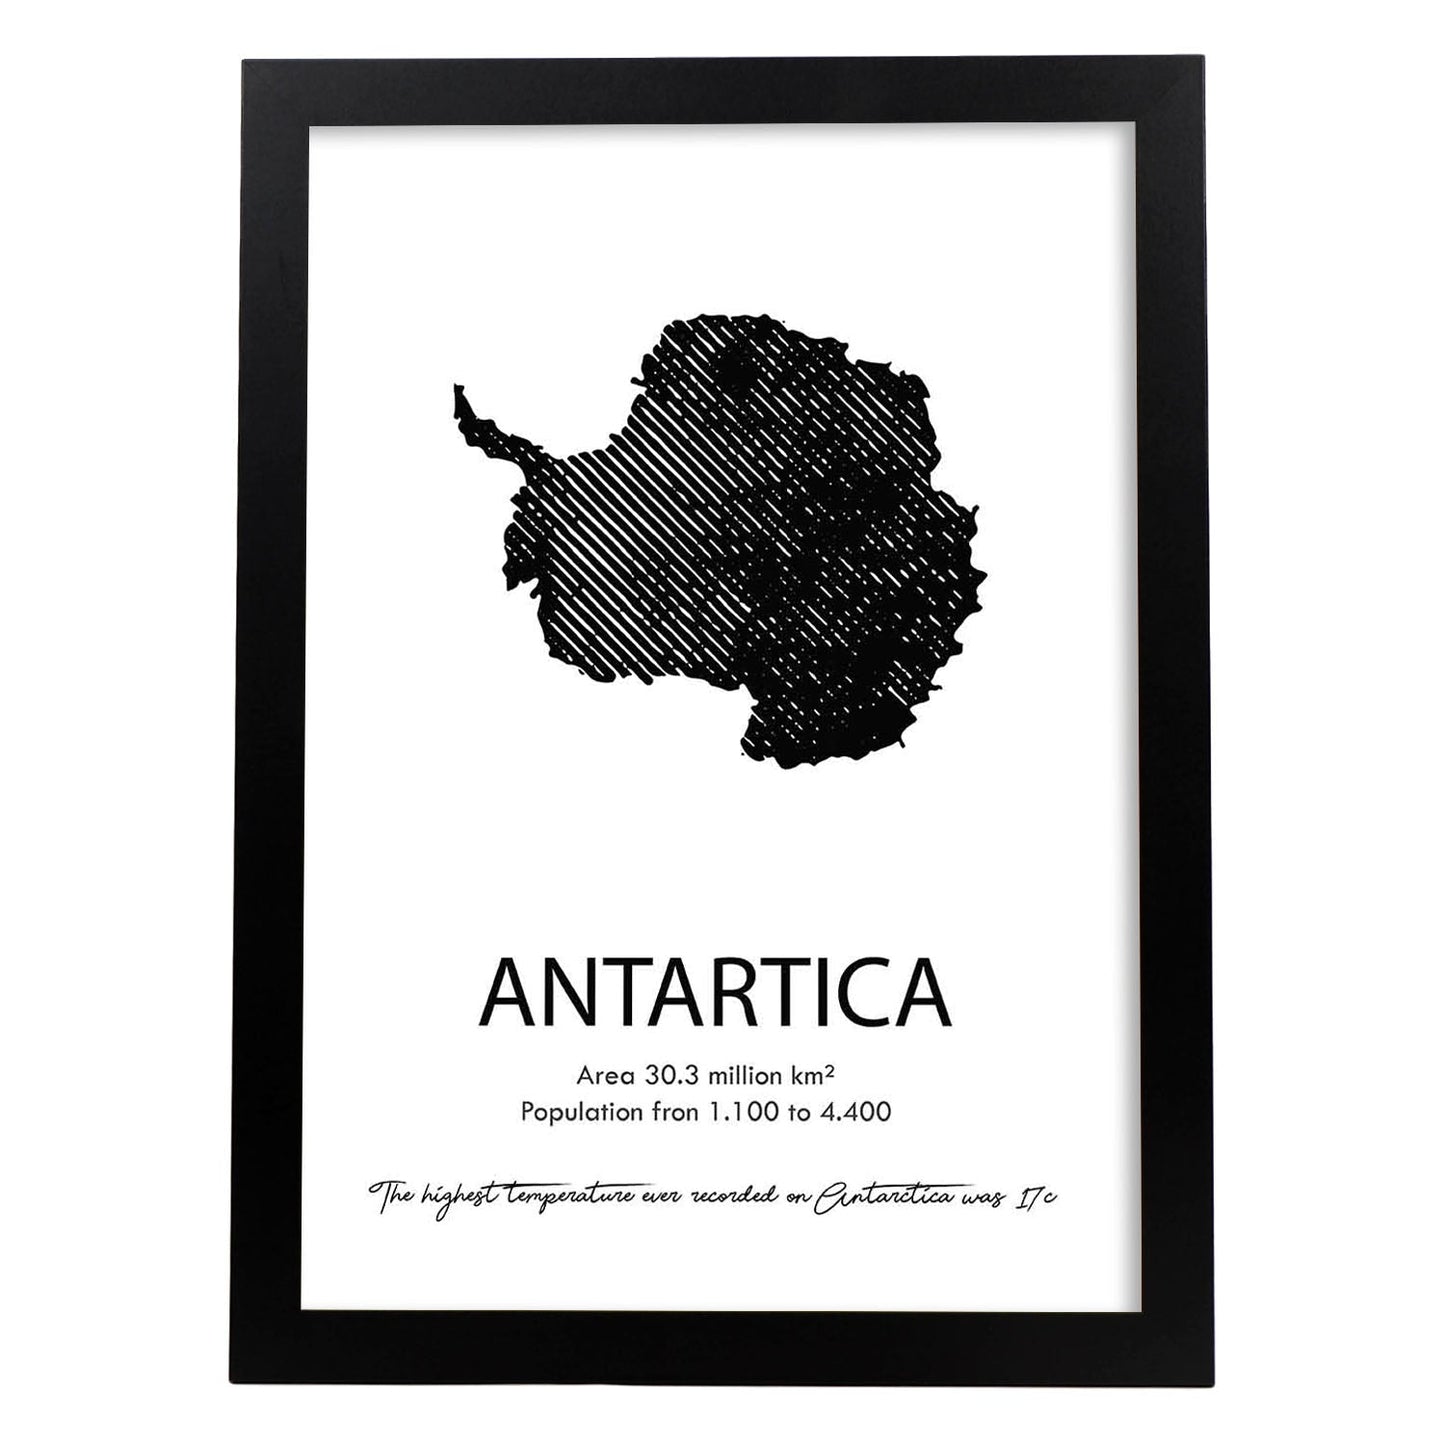 Poster de Antartida. Láminas de paises y continentes del mundo.-Artwork-Nacnic-A4-Marco Negro-Nacnic Estudio SL